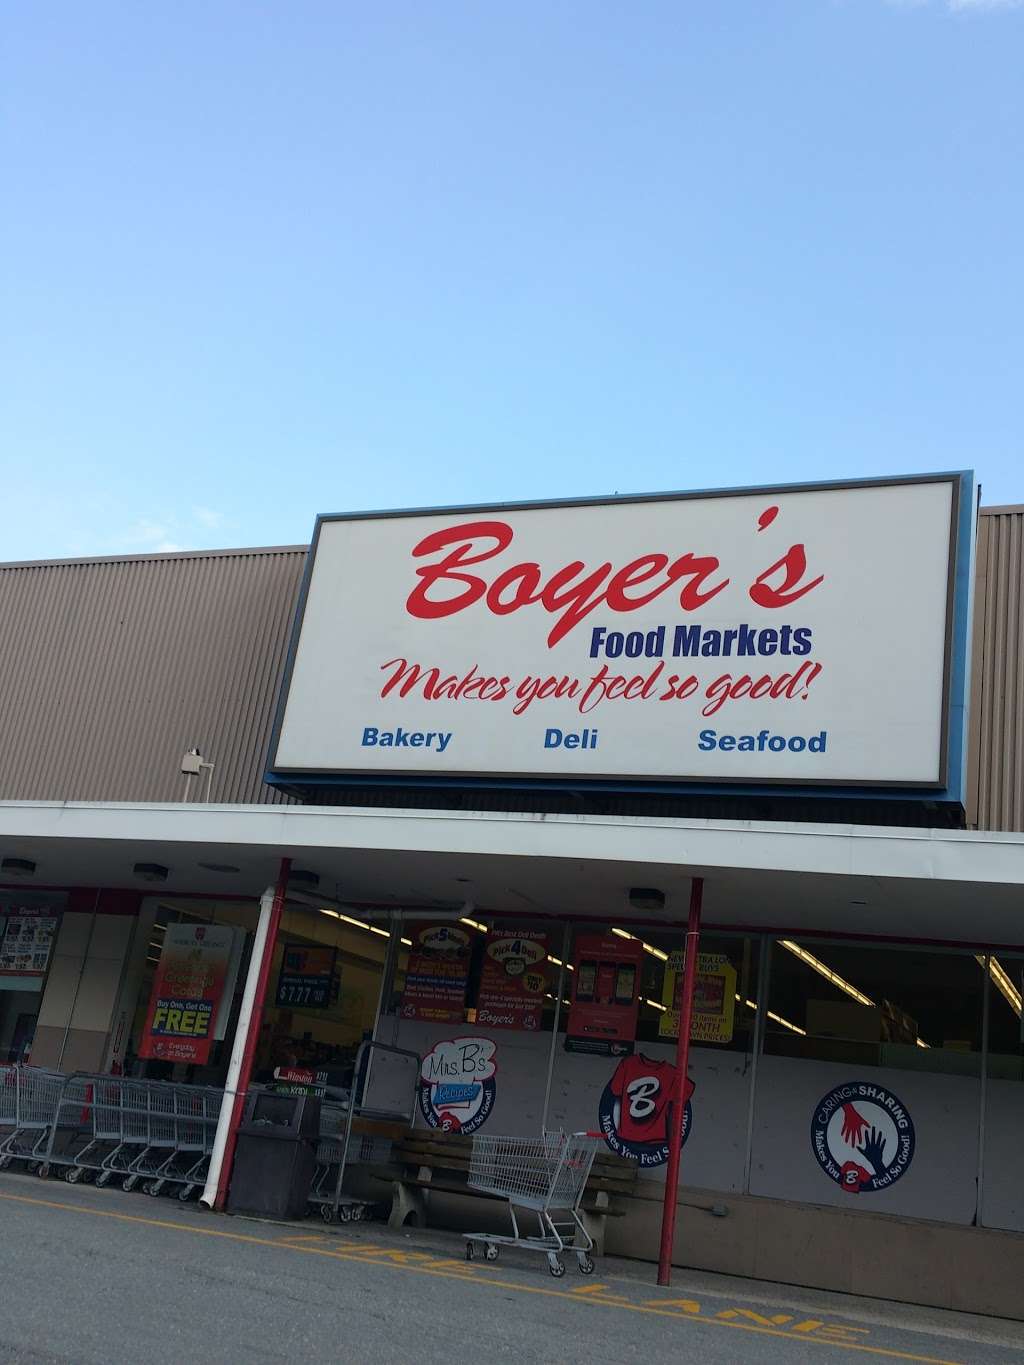 Boyers Food Market Lansford | 500 W Bertsch St, Lansford, PA 18232 | Phone: (570) 645-9214